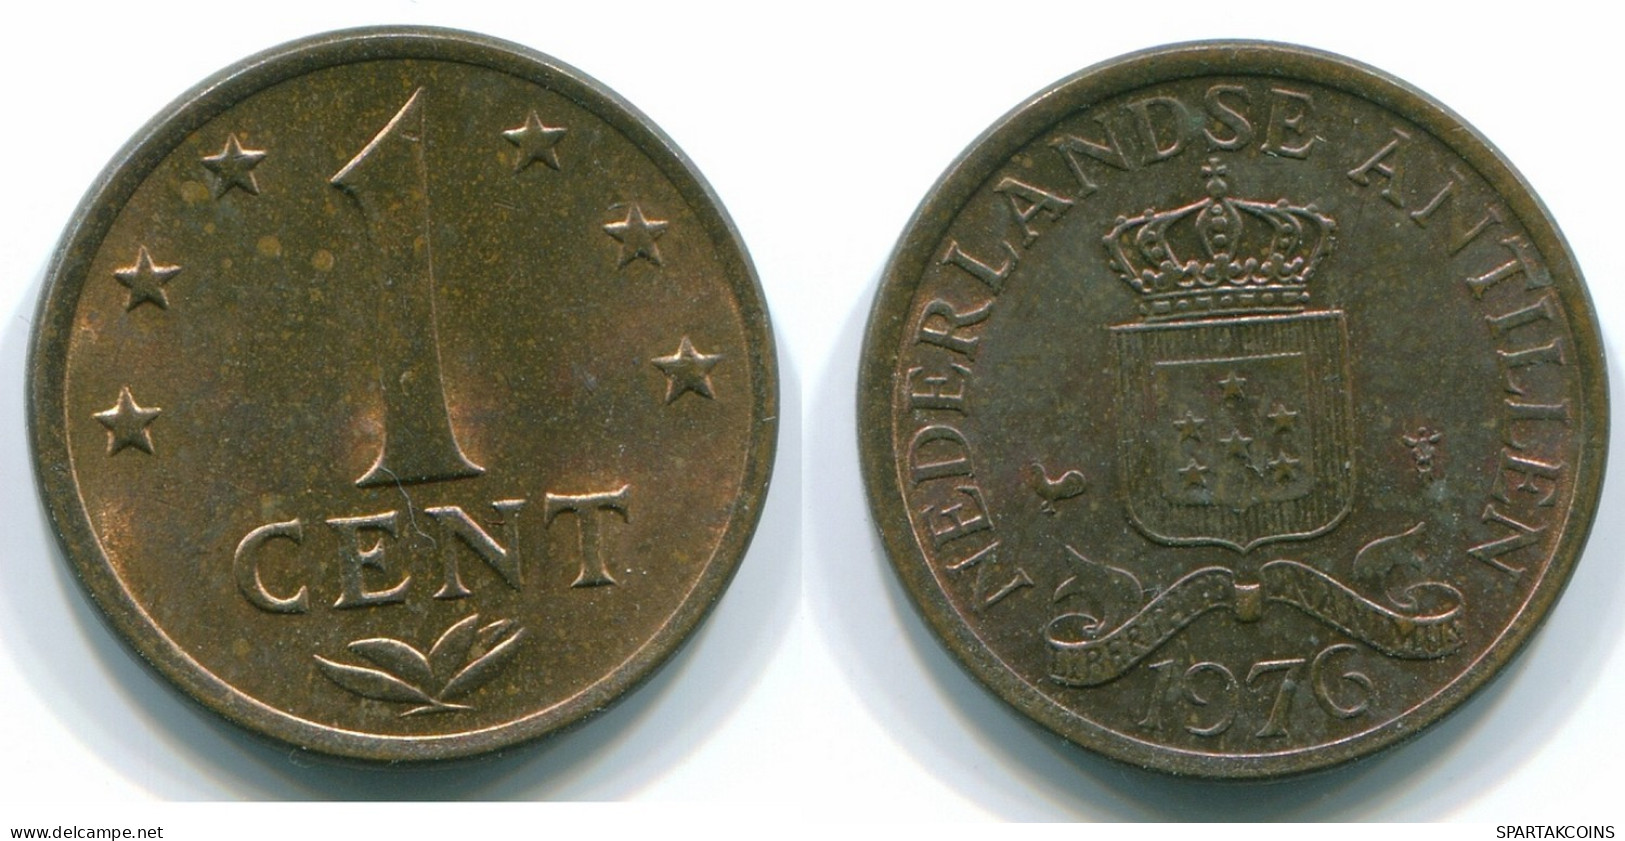 1 CENT 1976 NIEDERLÄNDISCHE ANTILLEN Bronze Koloniale Münze #S10690.D.A - Netherlands Antilles